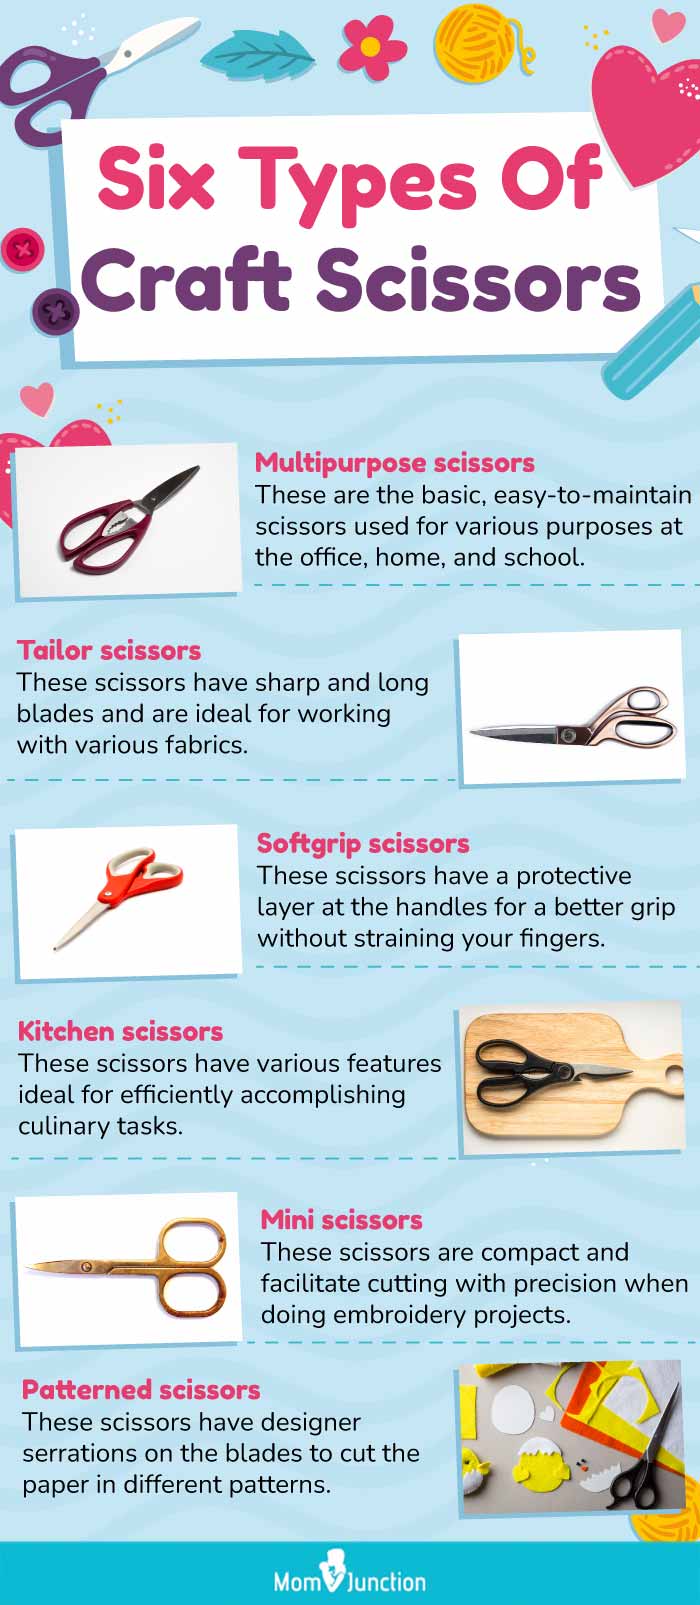 Scissor Skills Activity Book Kids Scissors Ages 8- 10 Kids Safety Scissors  Scissor for Kids Pre-school Training Scissors - AliExpress